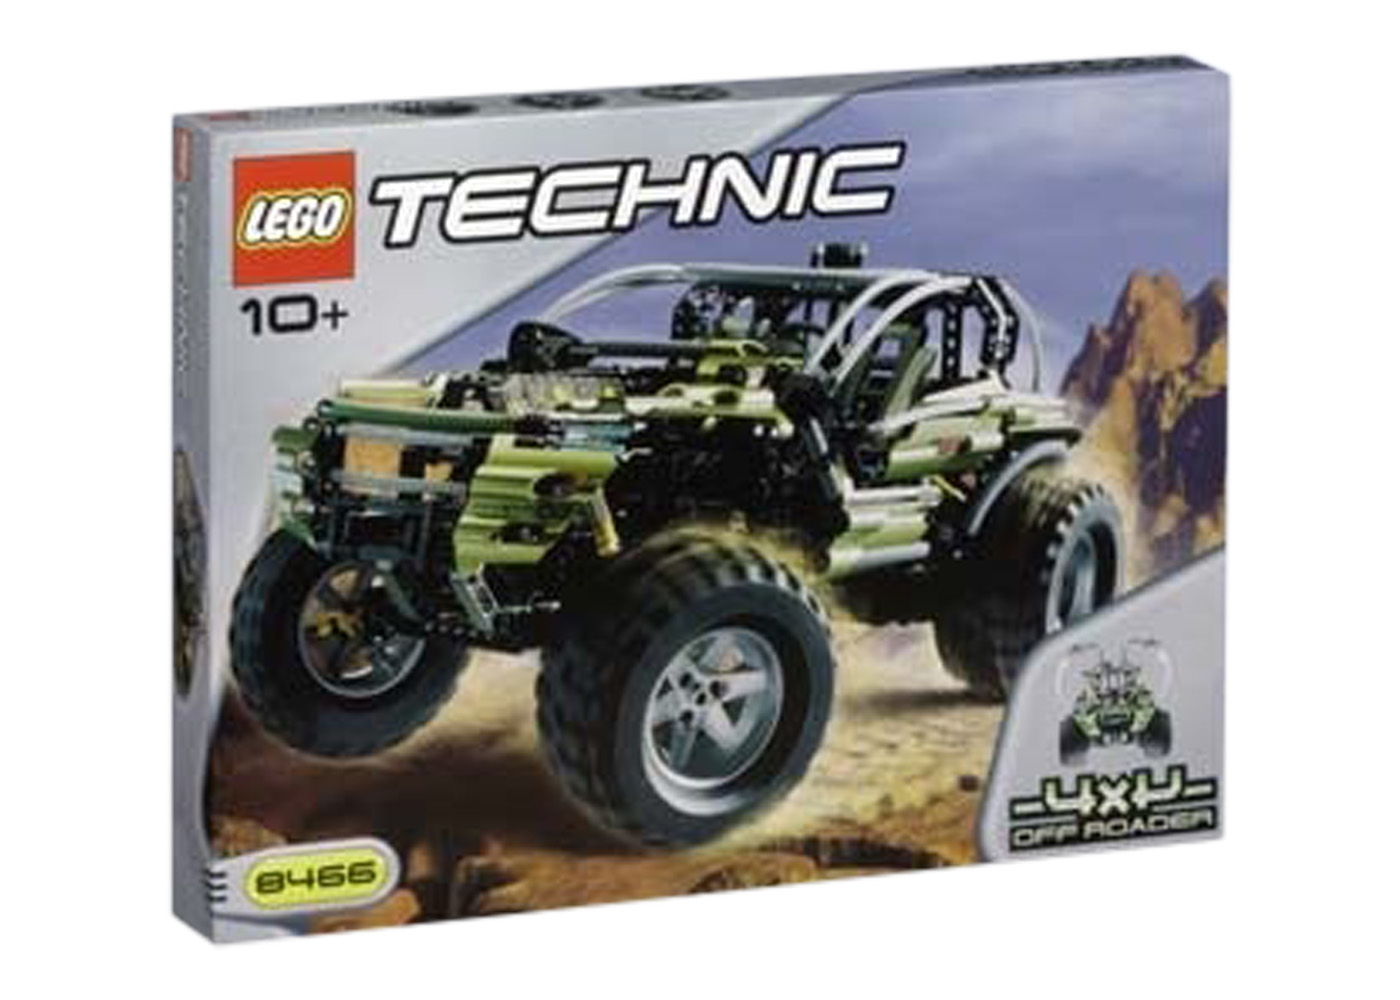 LEGO Technic 4x4 Off-Roader Set 8466 - US